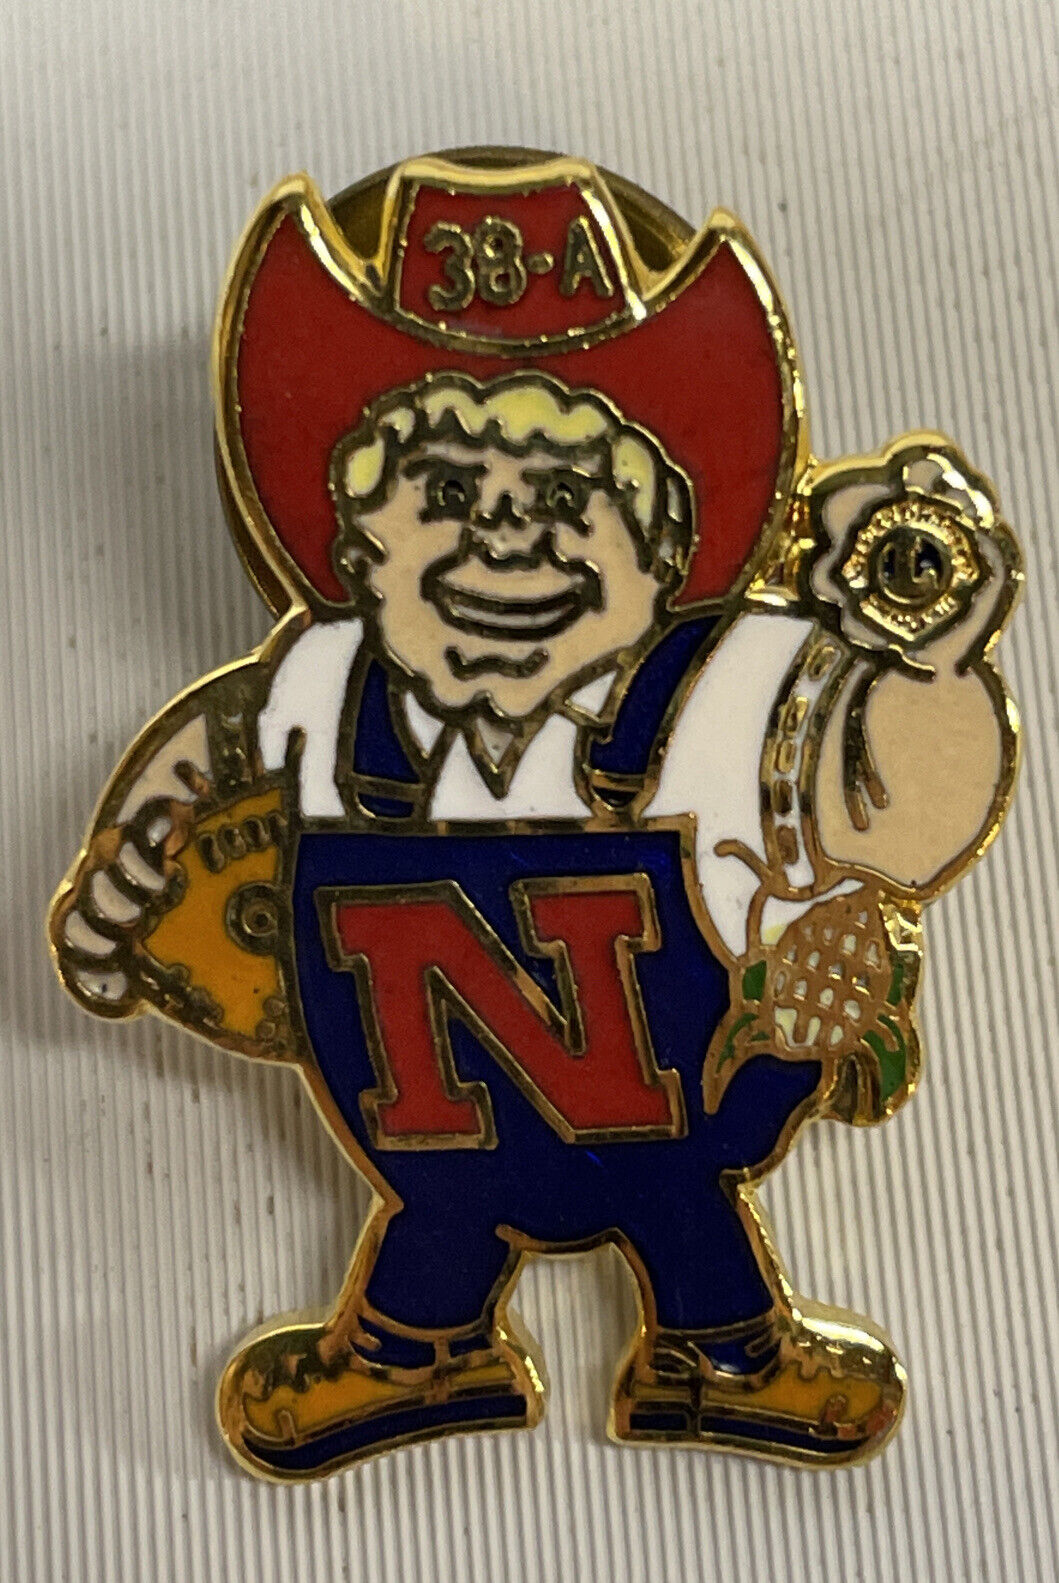 Nebraska Cornhuskers Lions Club Lapel Pin Vintage Football Herbie Husker 1989